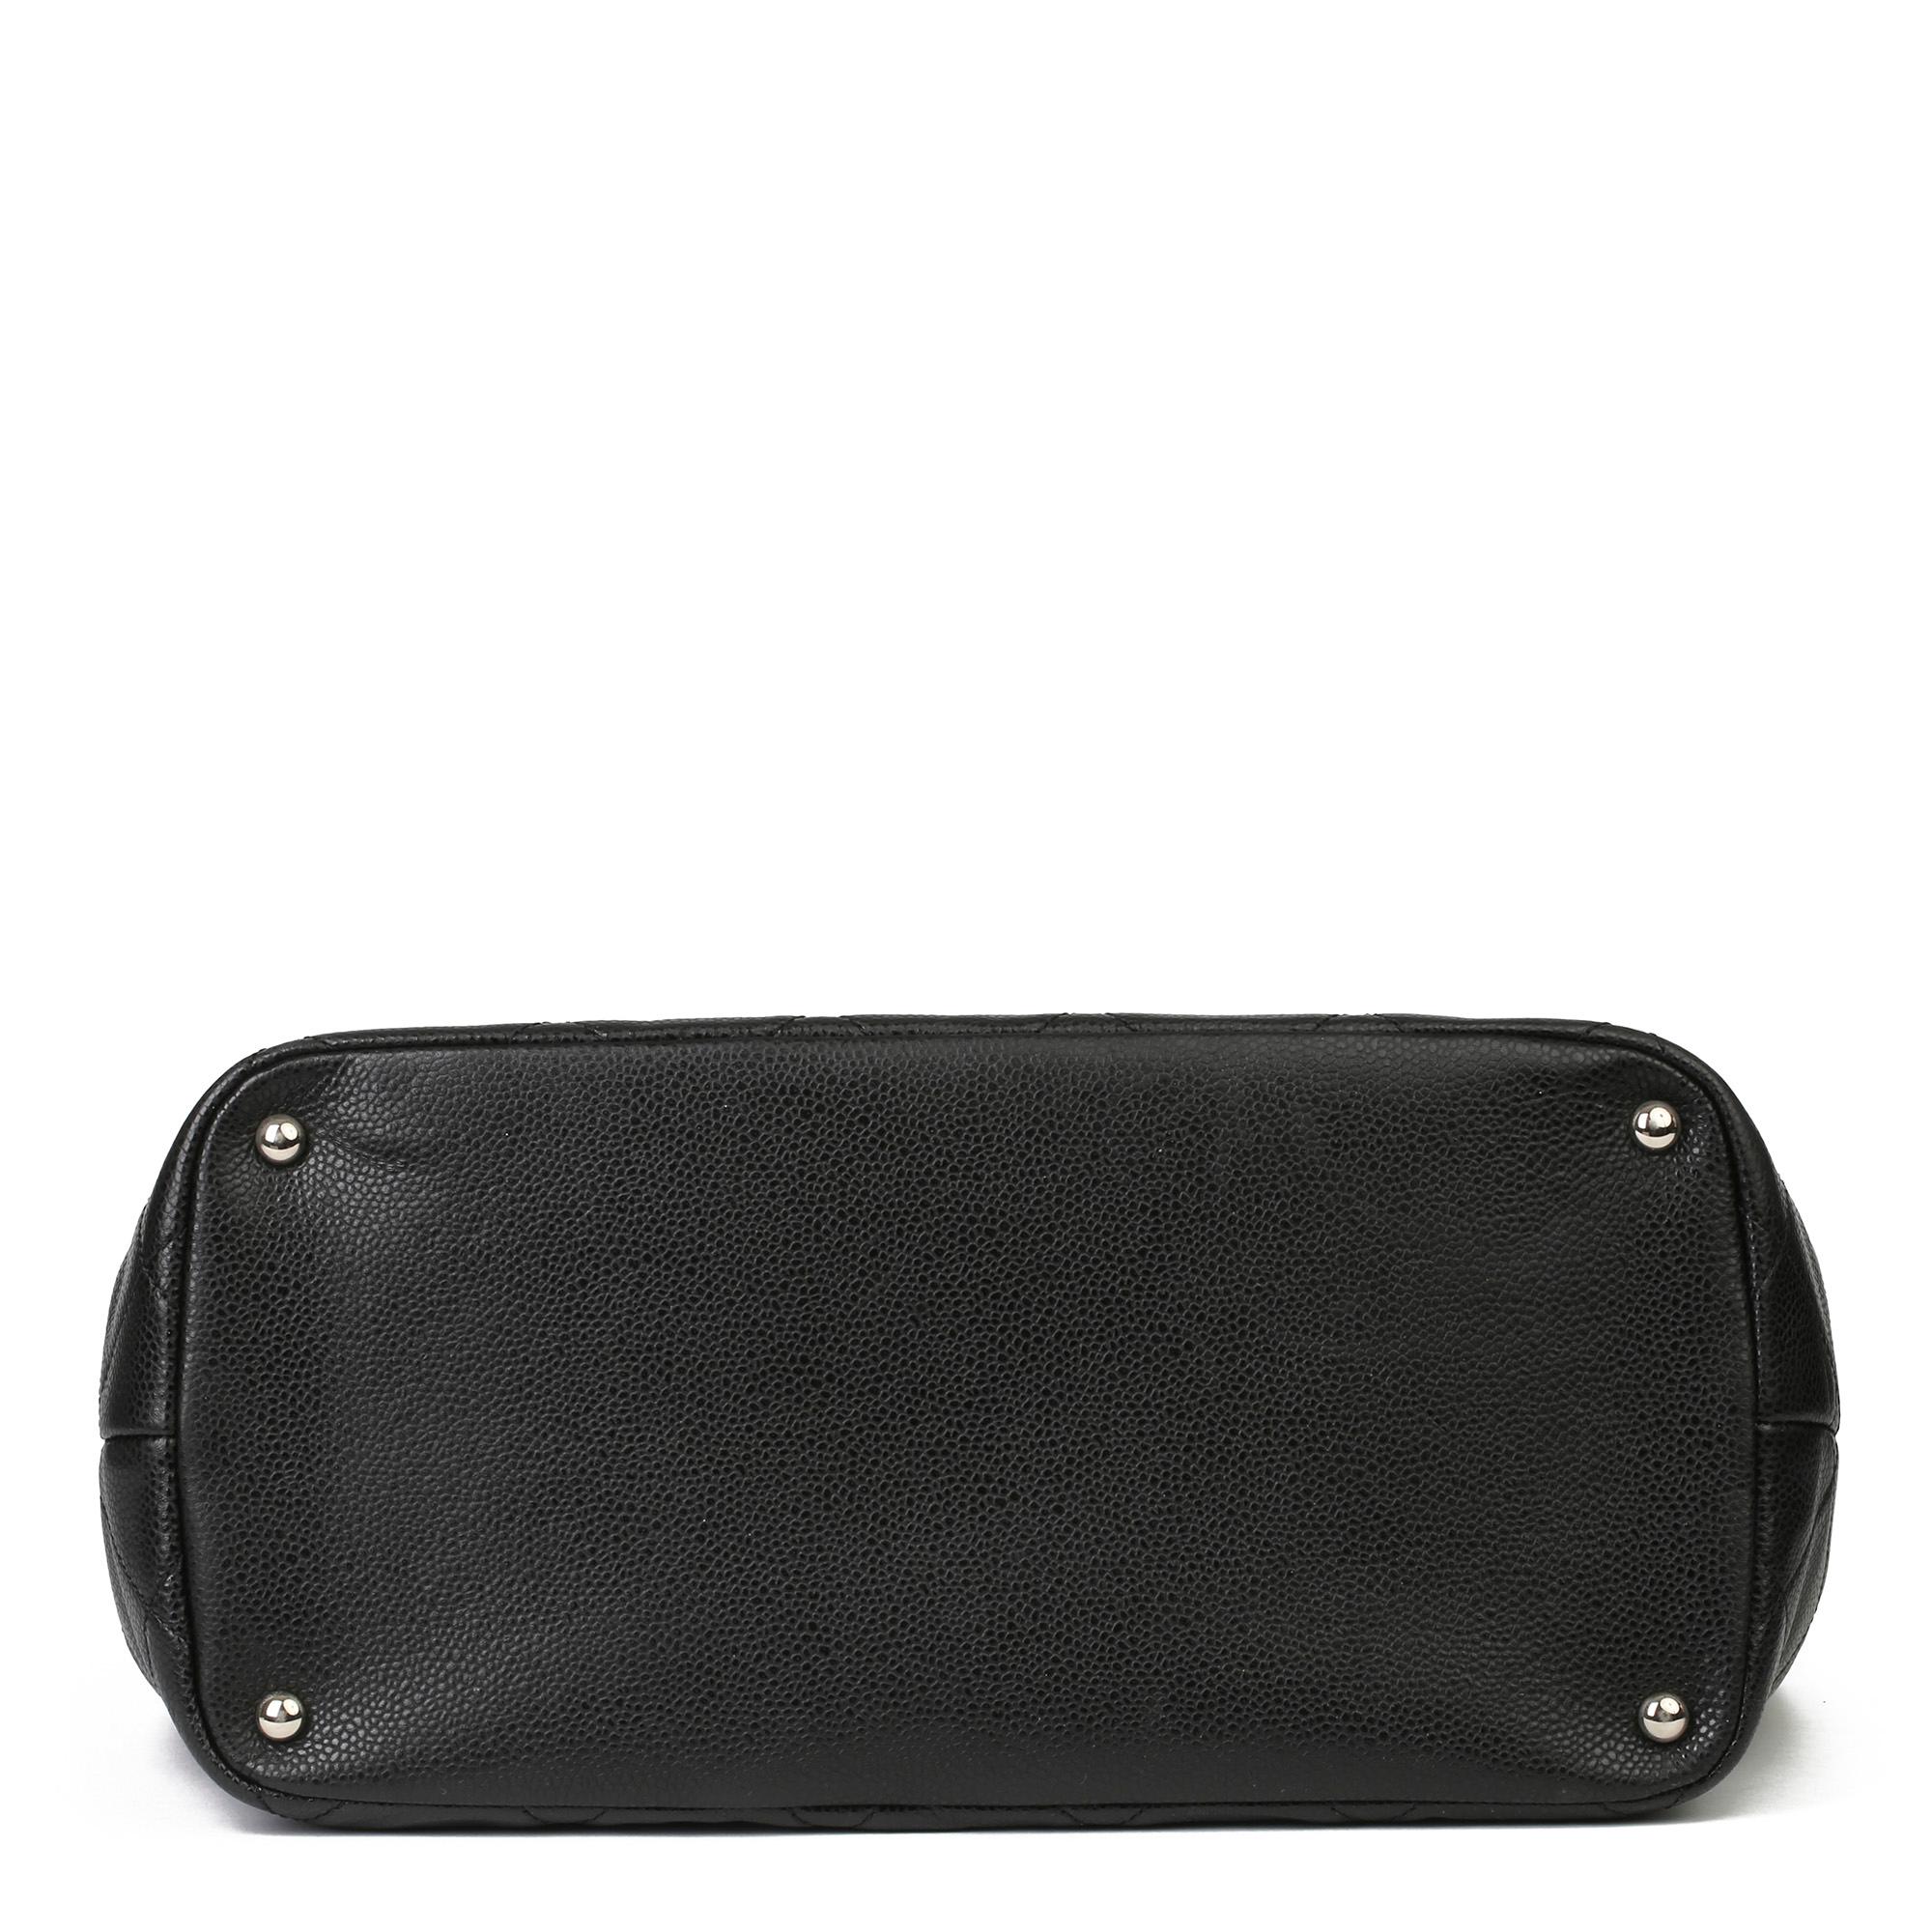 2012 Chanel Black Quilted Caviar Leather Timeless Shoulder Bag  1